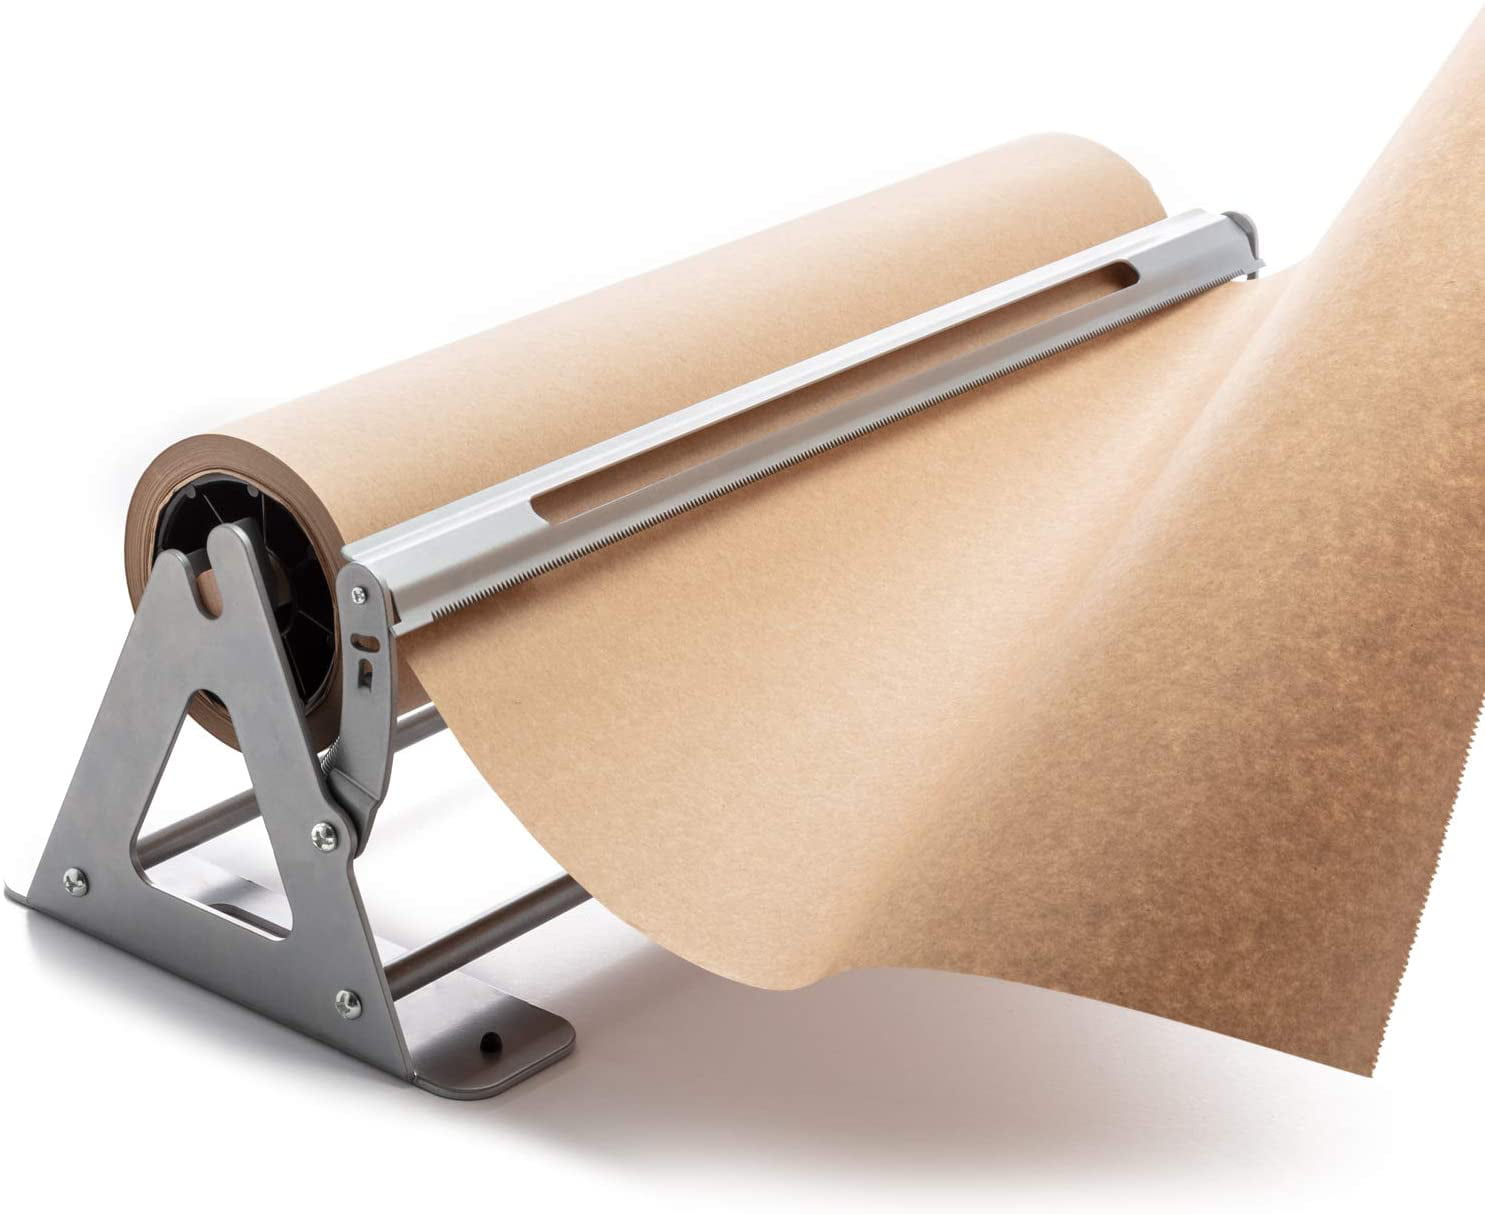 Paper Roll Cutter - Butcher Paper Dispenser - Heavy Duty 24 Inch